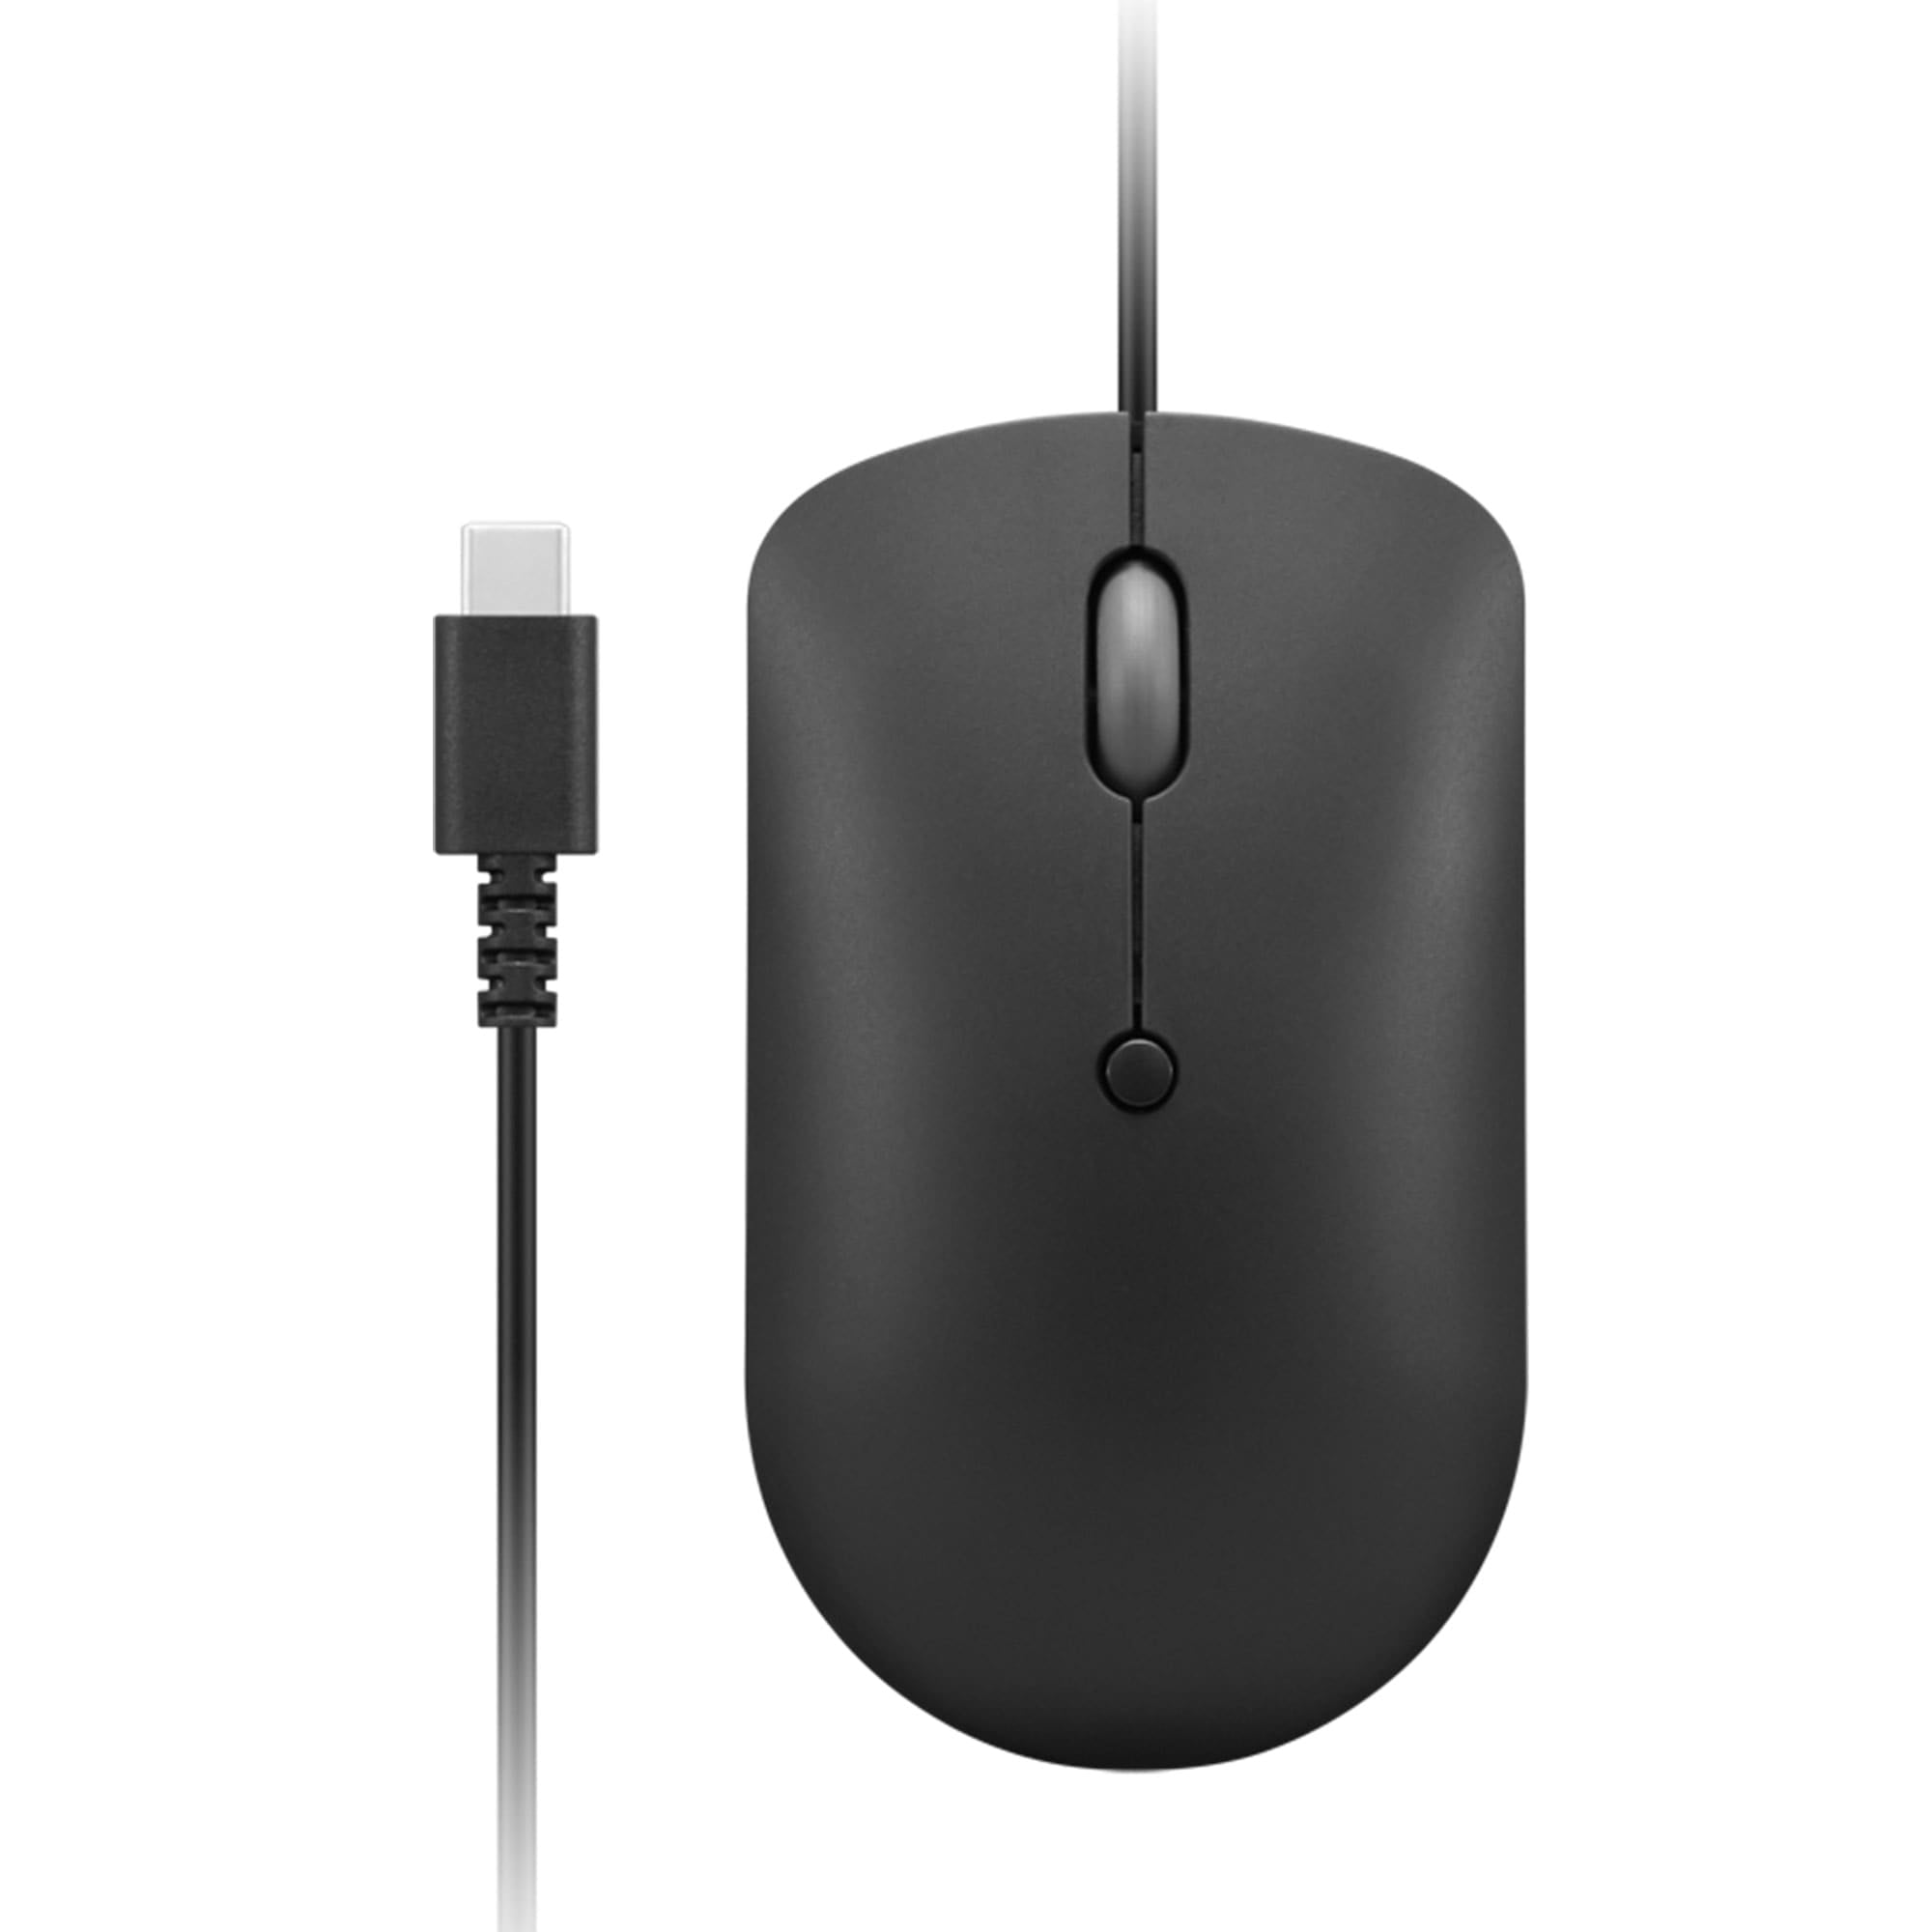 Lenovo 400 USB-C Mouse - Walmart.com